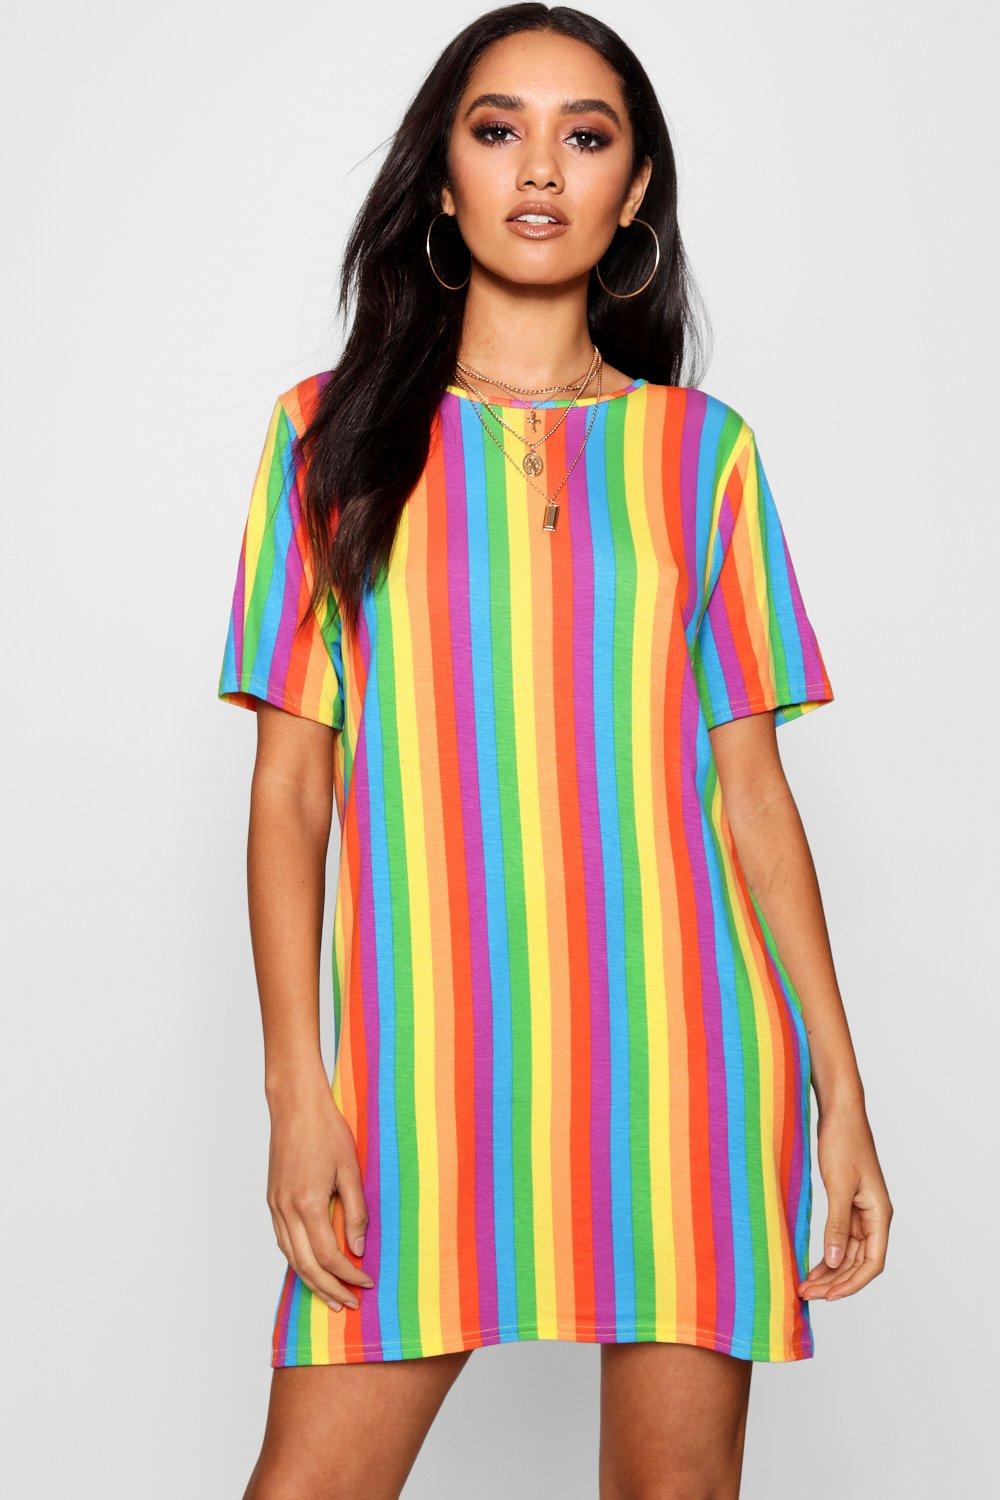 rainbow dress boohoo